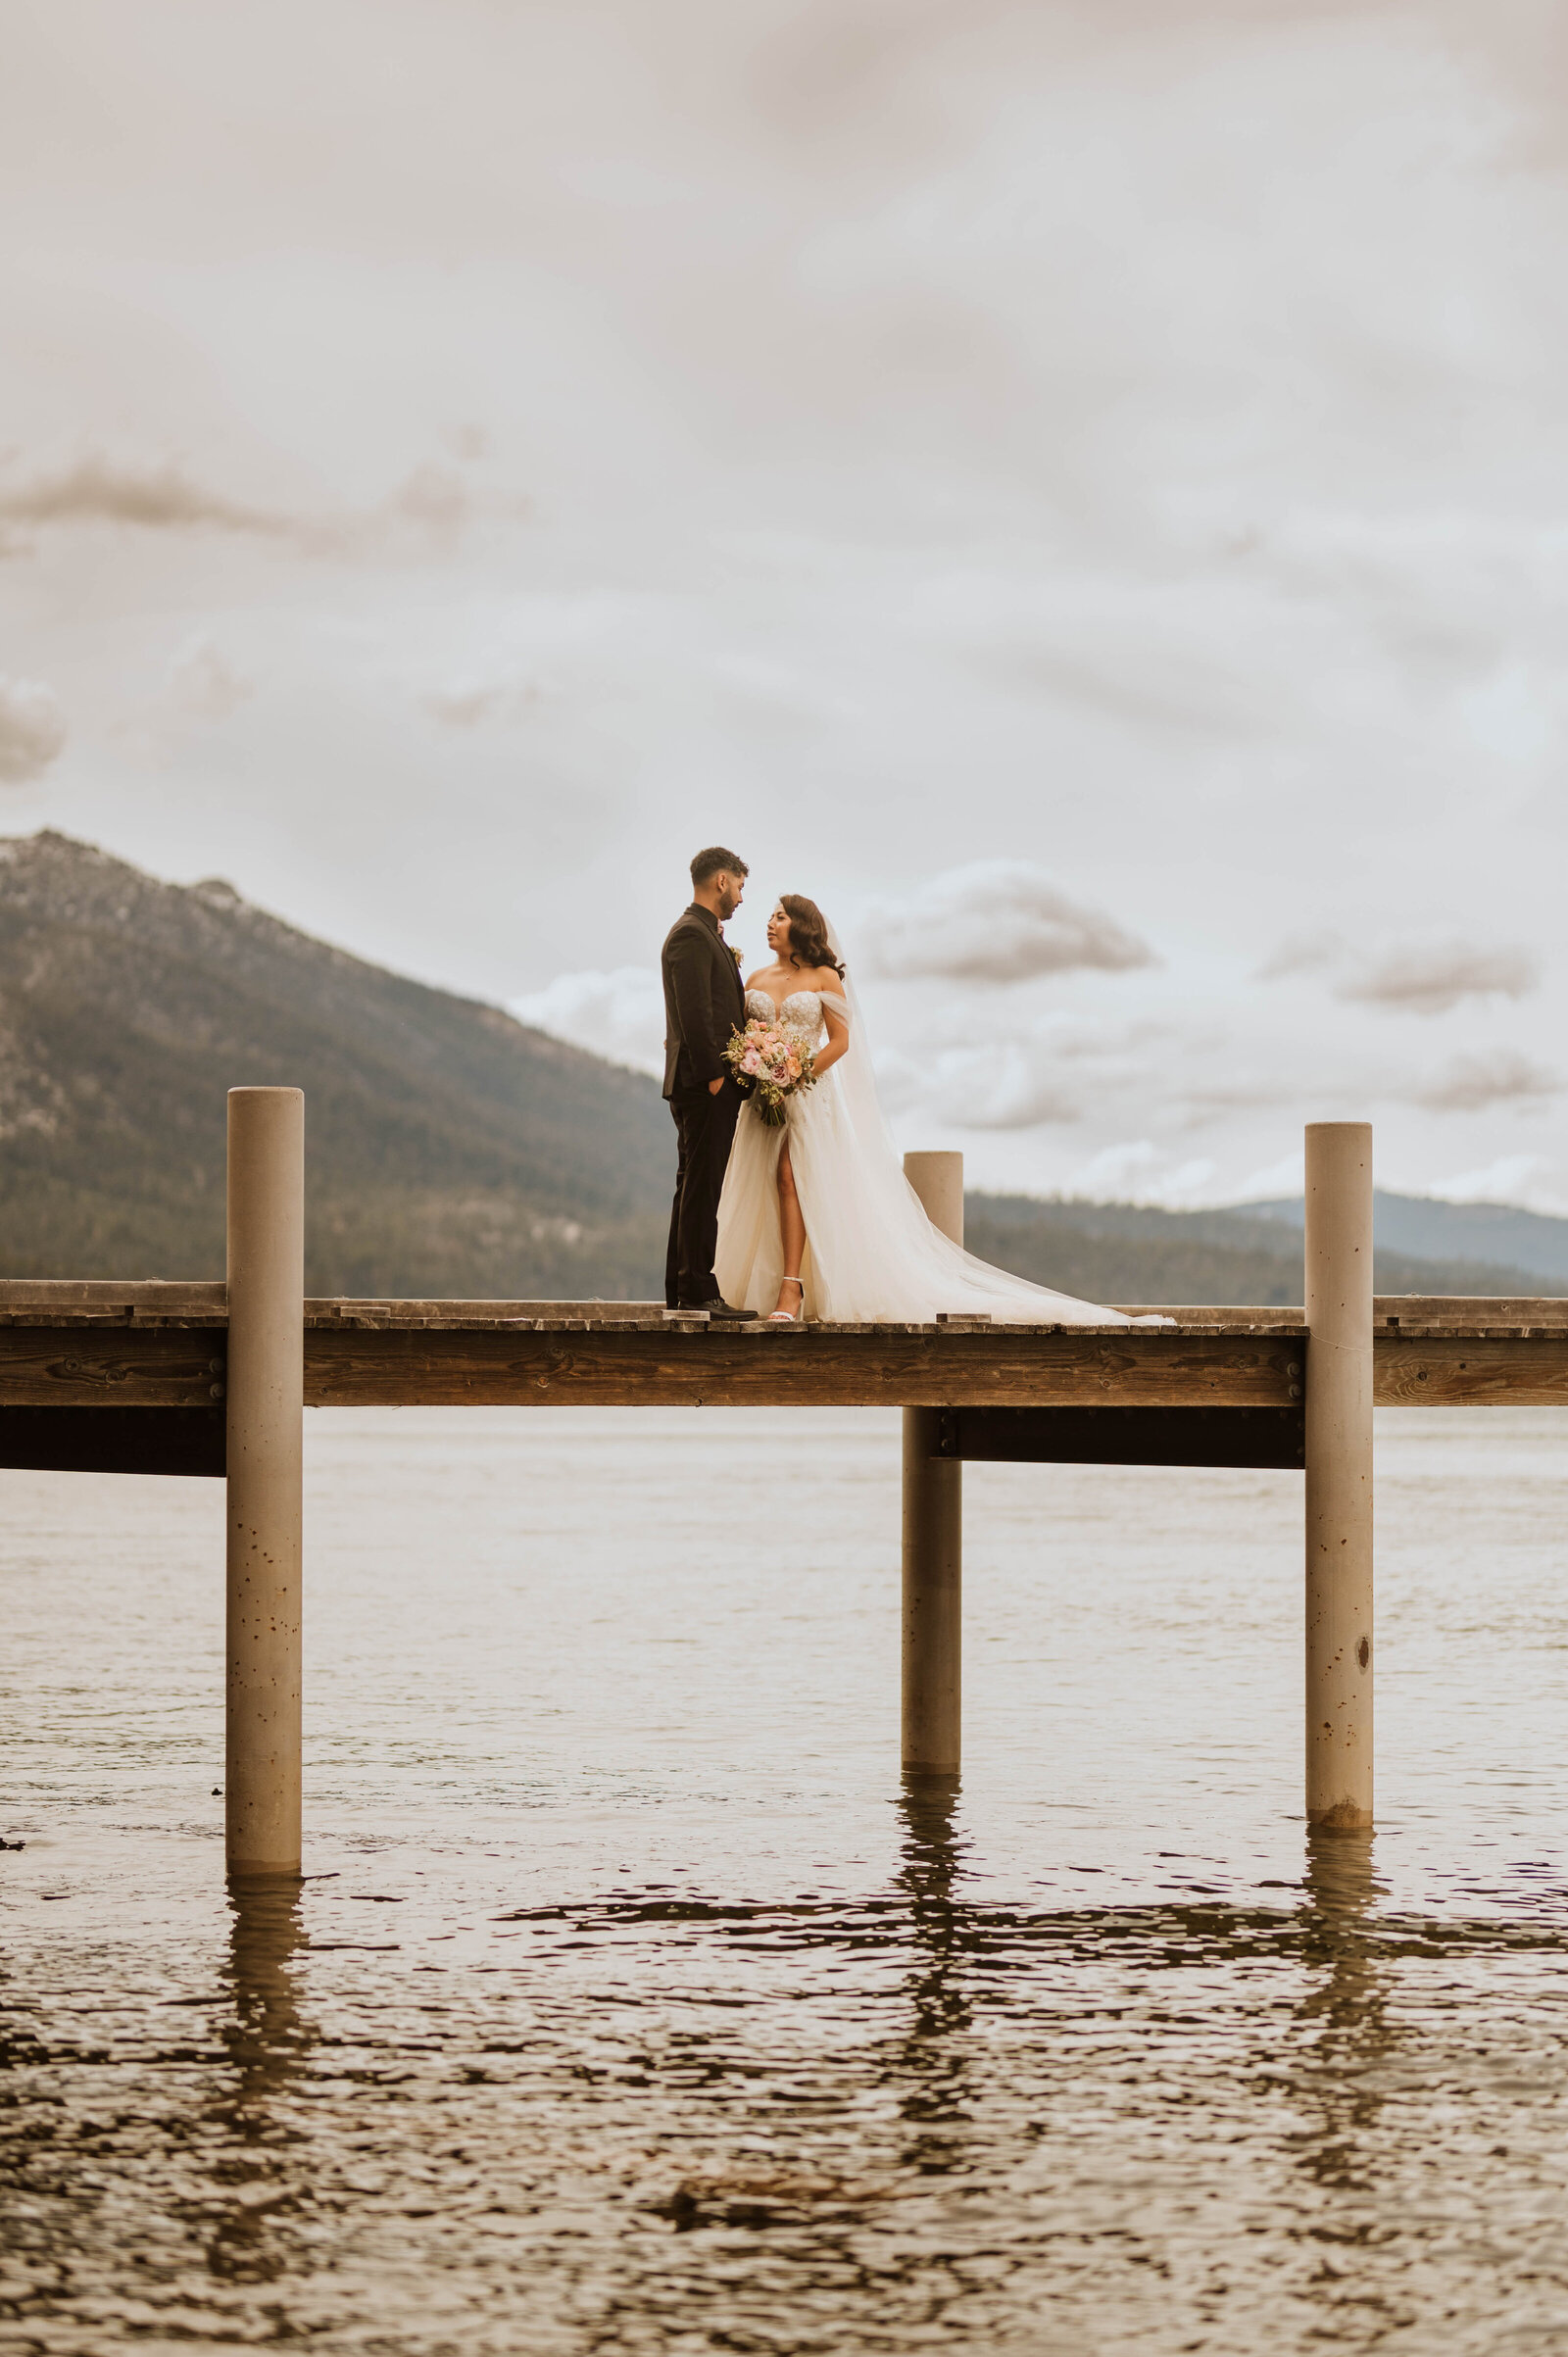 Tahoe wedding photography, wedding photographer in Tahoe, professional wedding photos